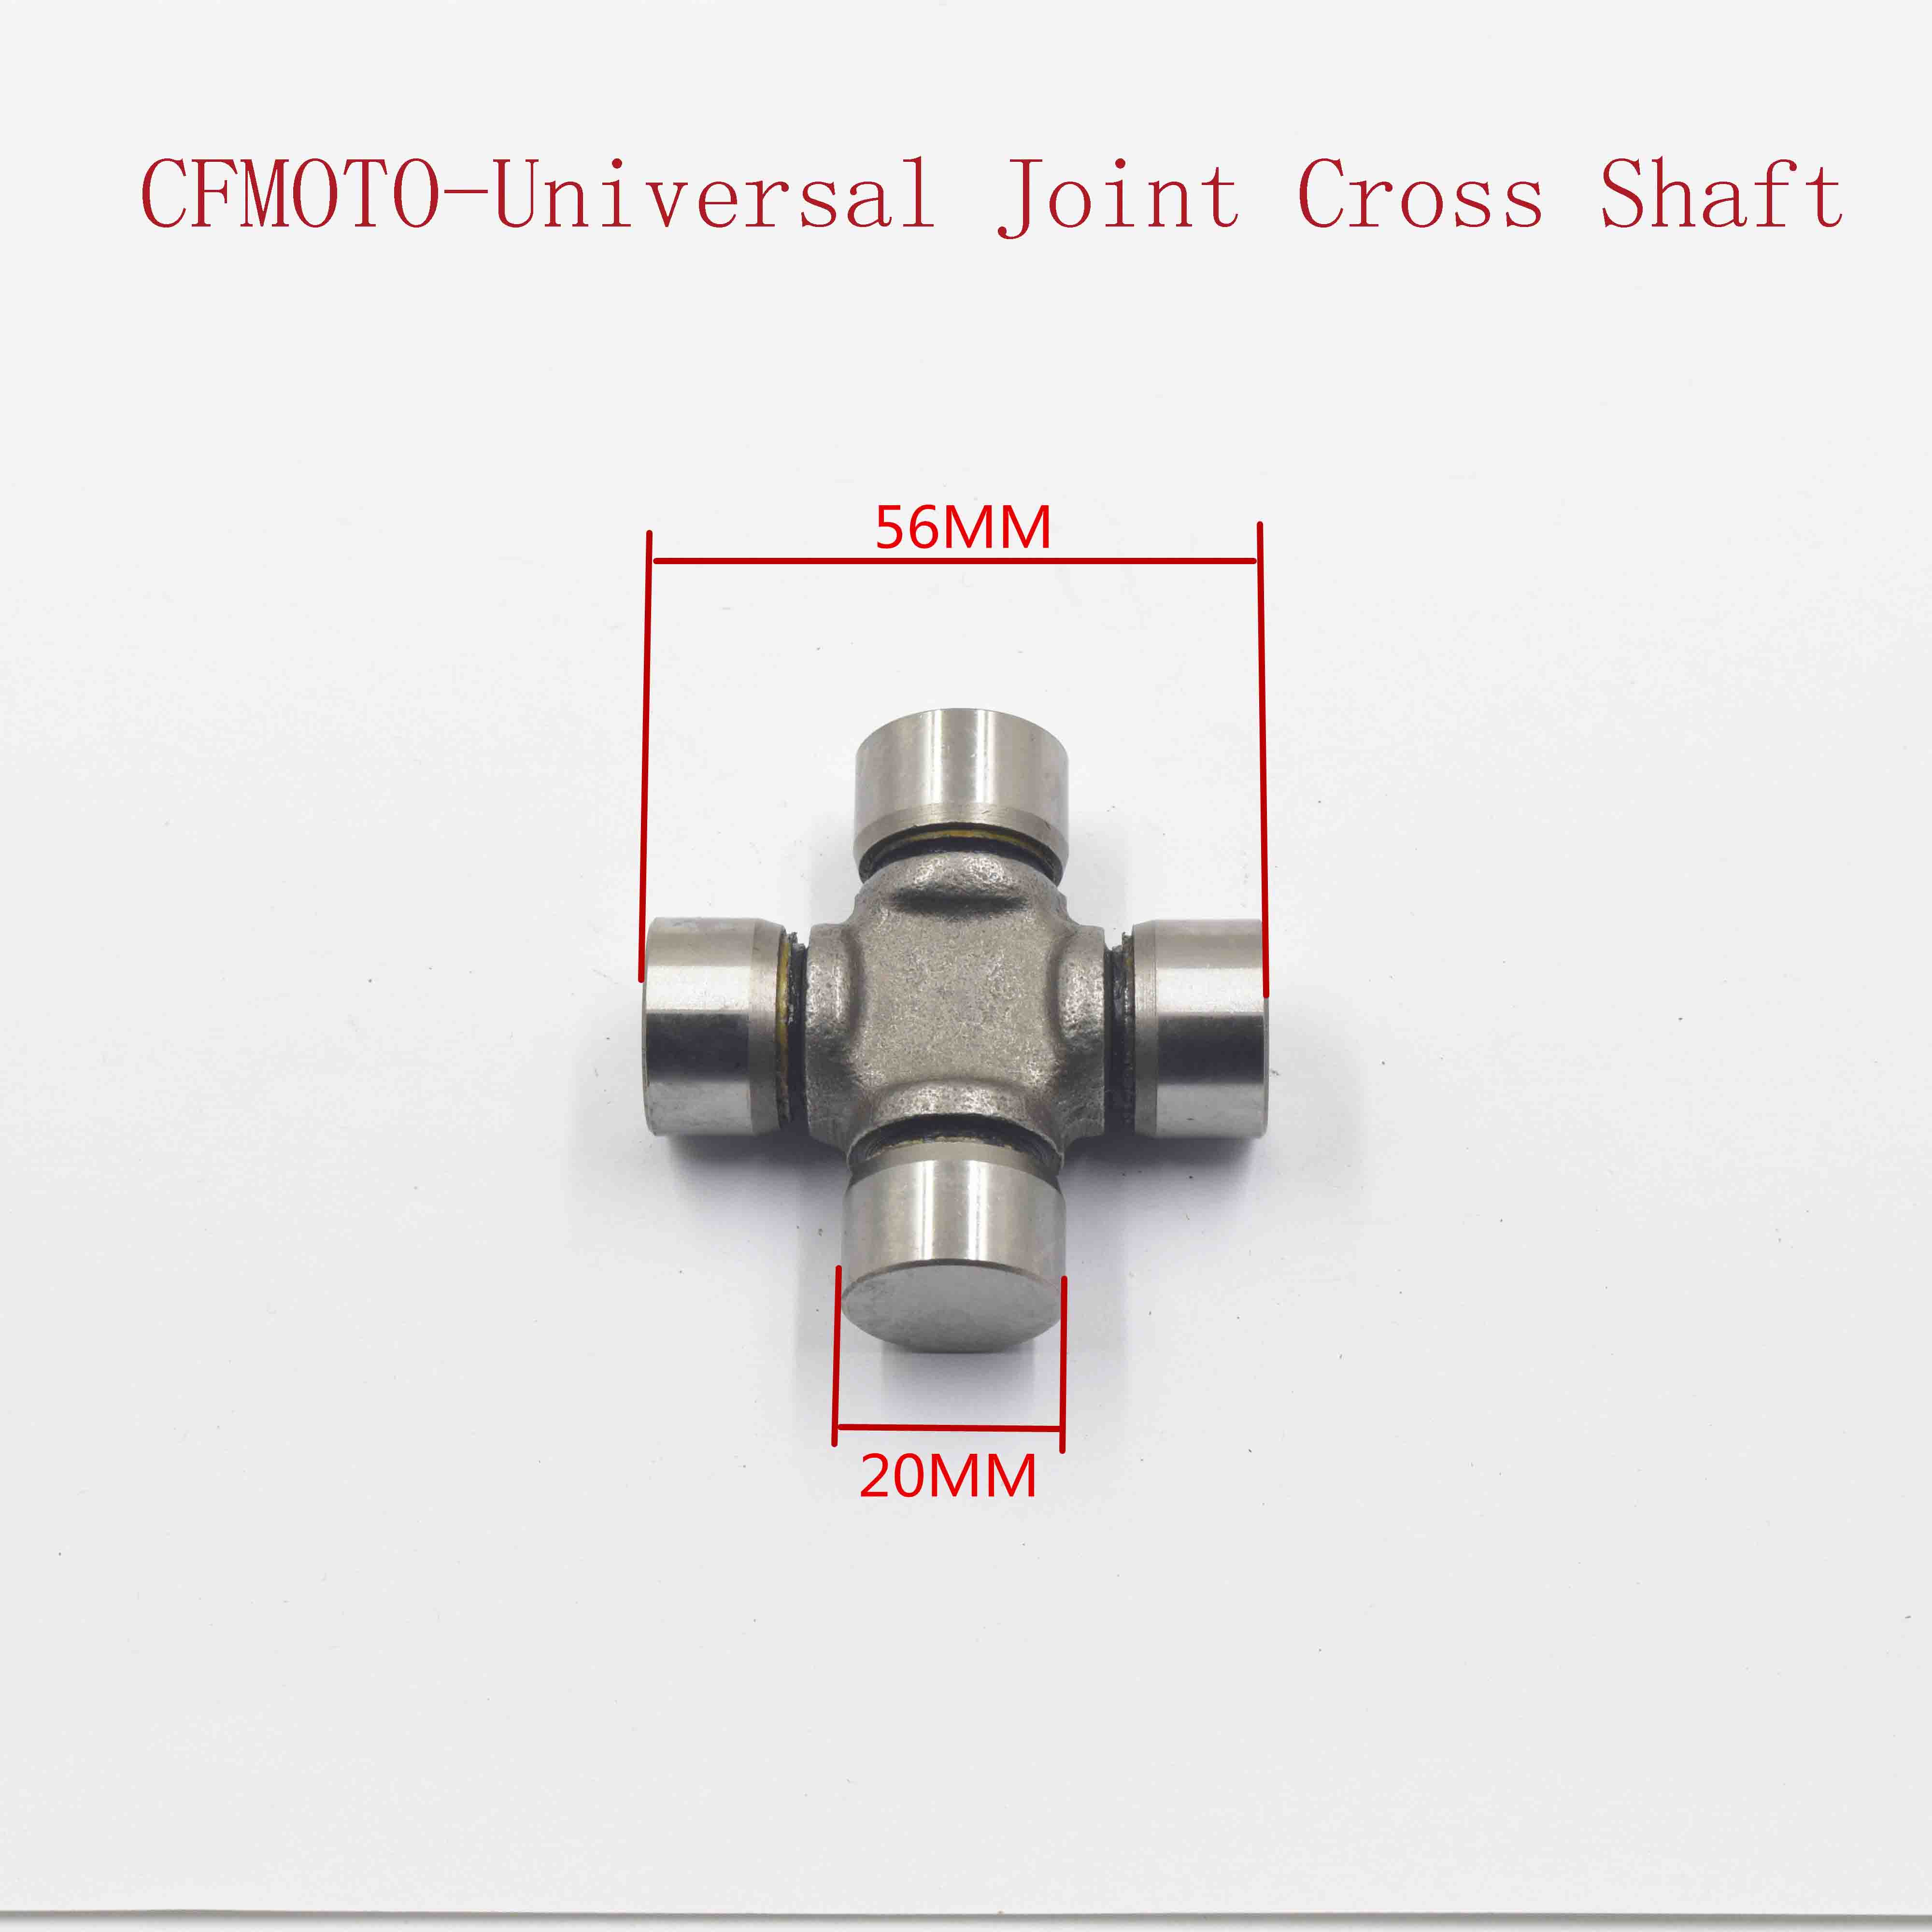 CFMOTO-Universal Joint Cross Shaft 